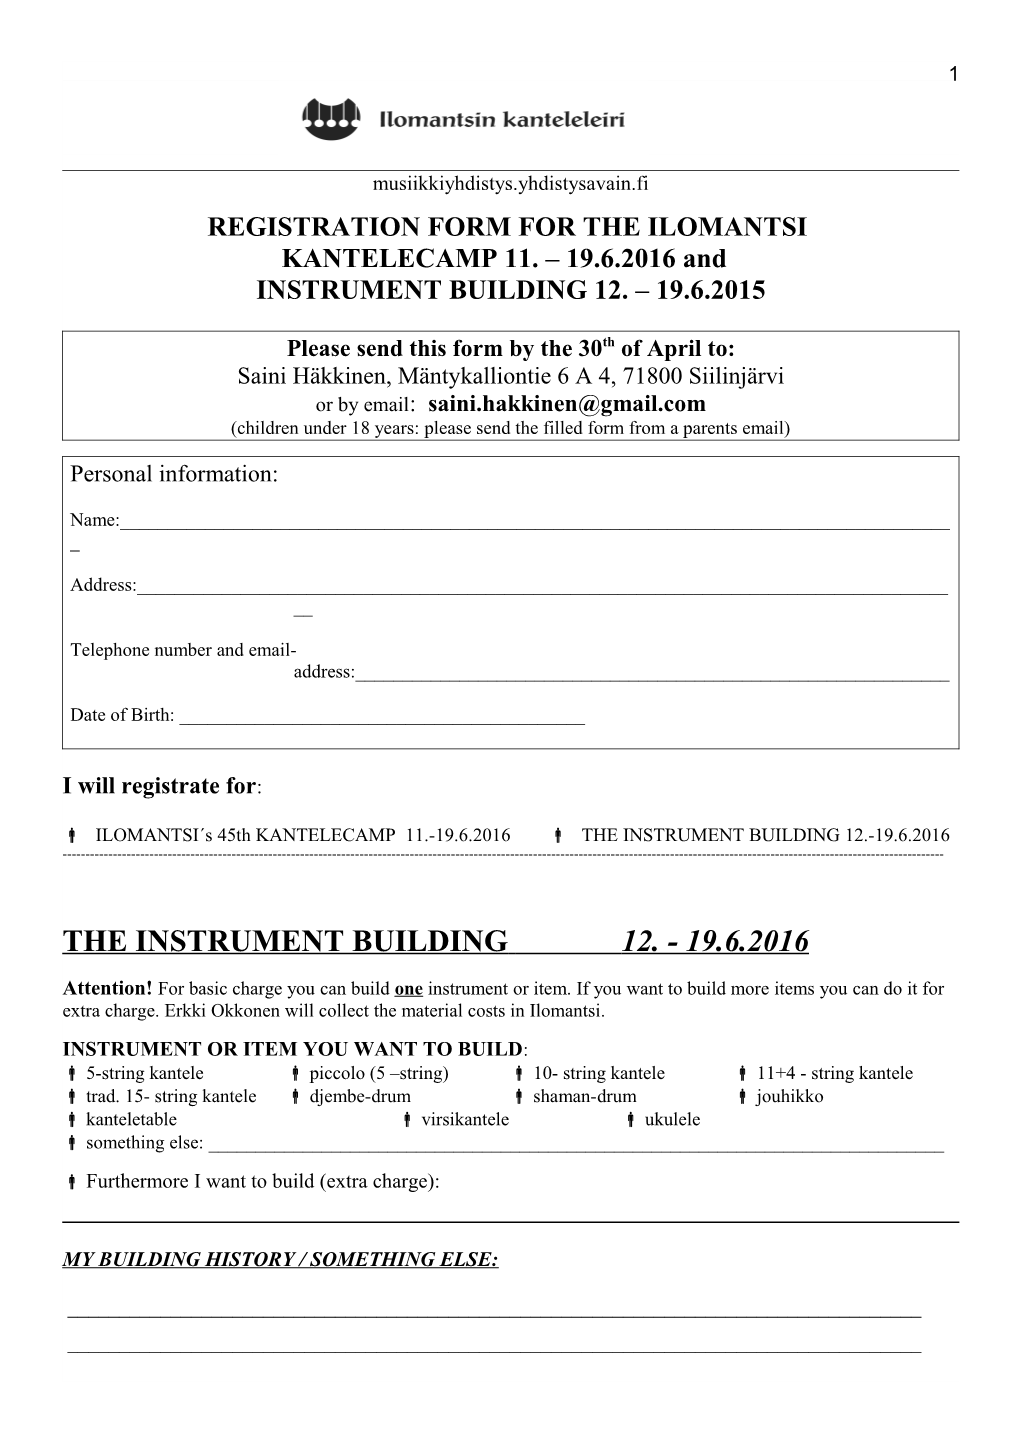 Registration Form for the Ilomantsi